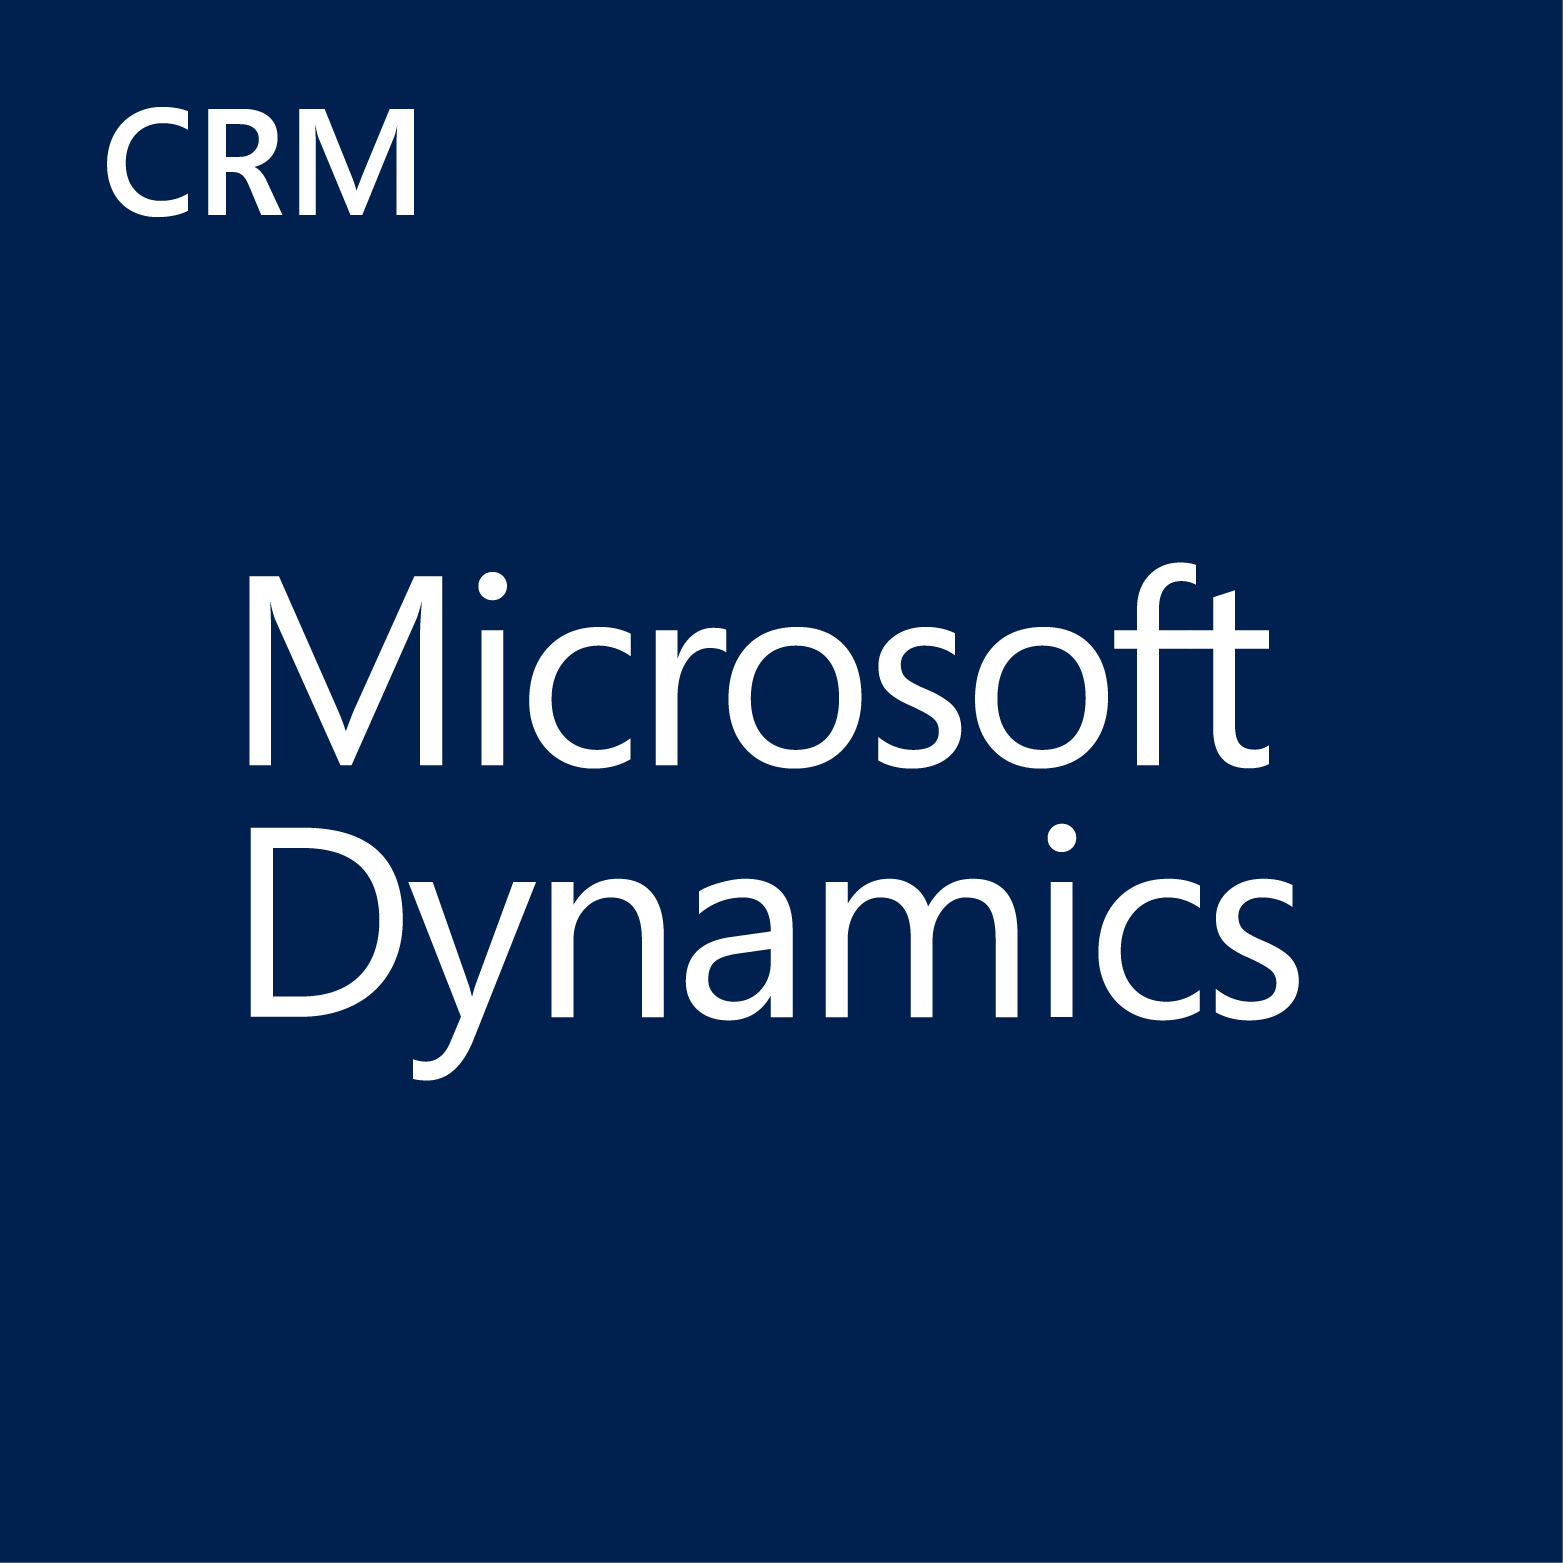 Microsoft Dynamics Business Solutions Logo - Microsoft Business Solutions. Corporate Renaissance Group